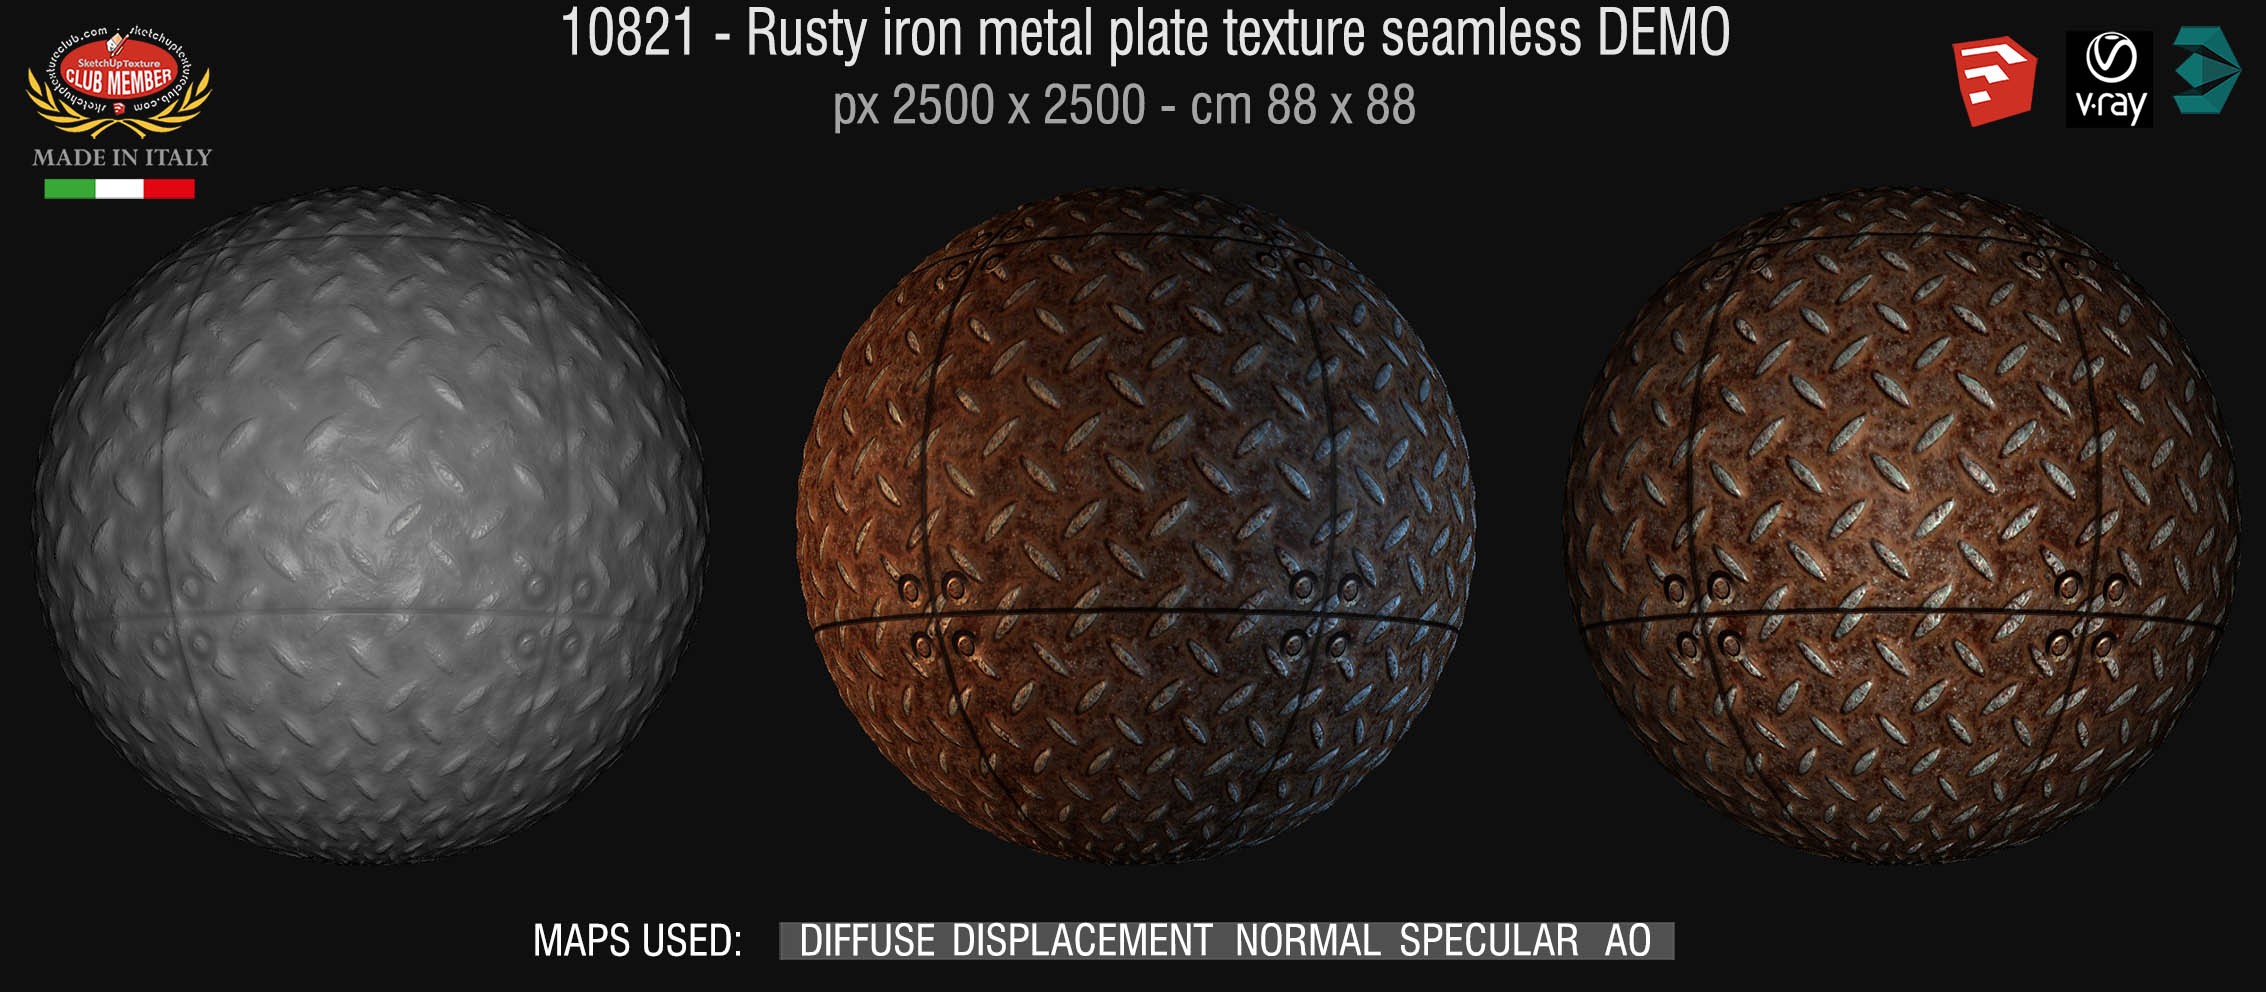 10821 HR Rusty iron metal plate texture seamless + maps DEMO